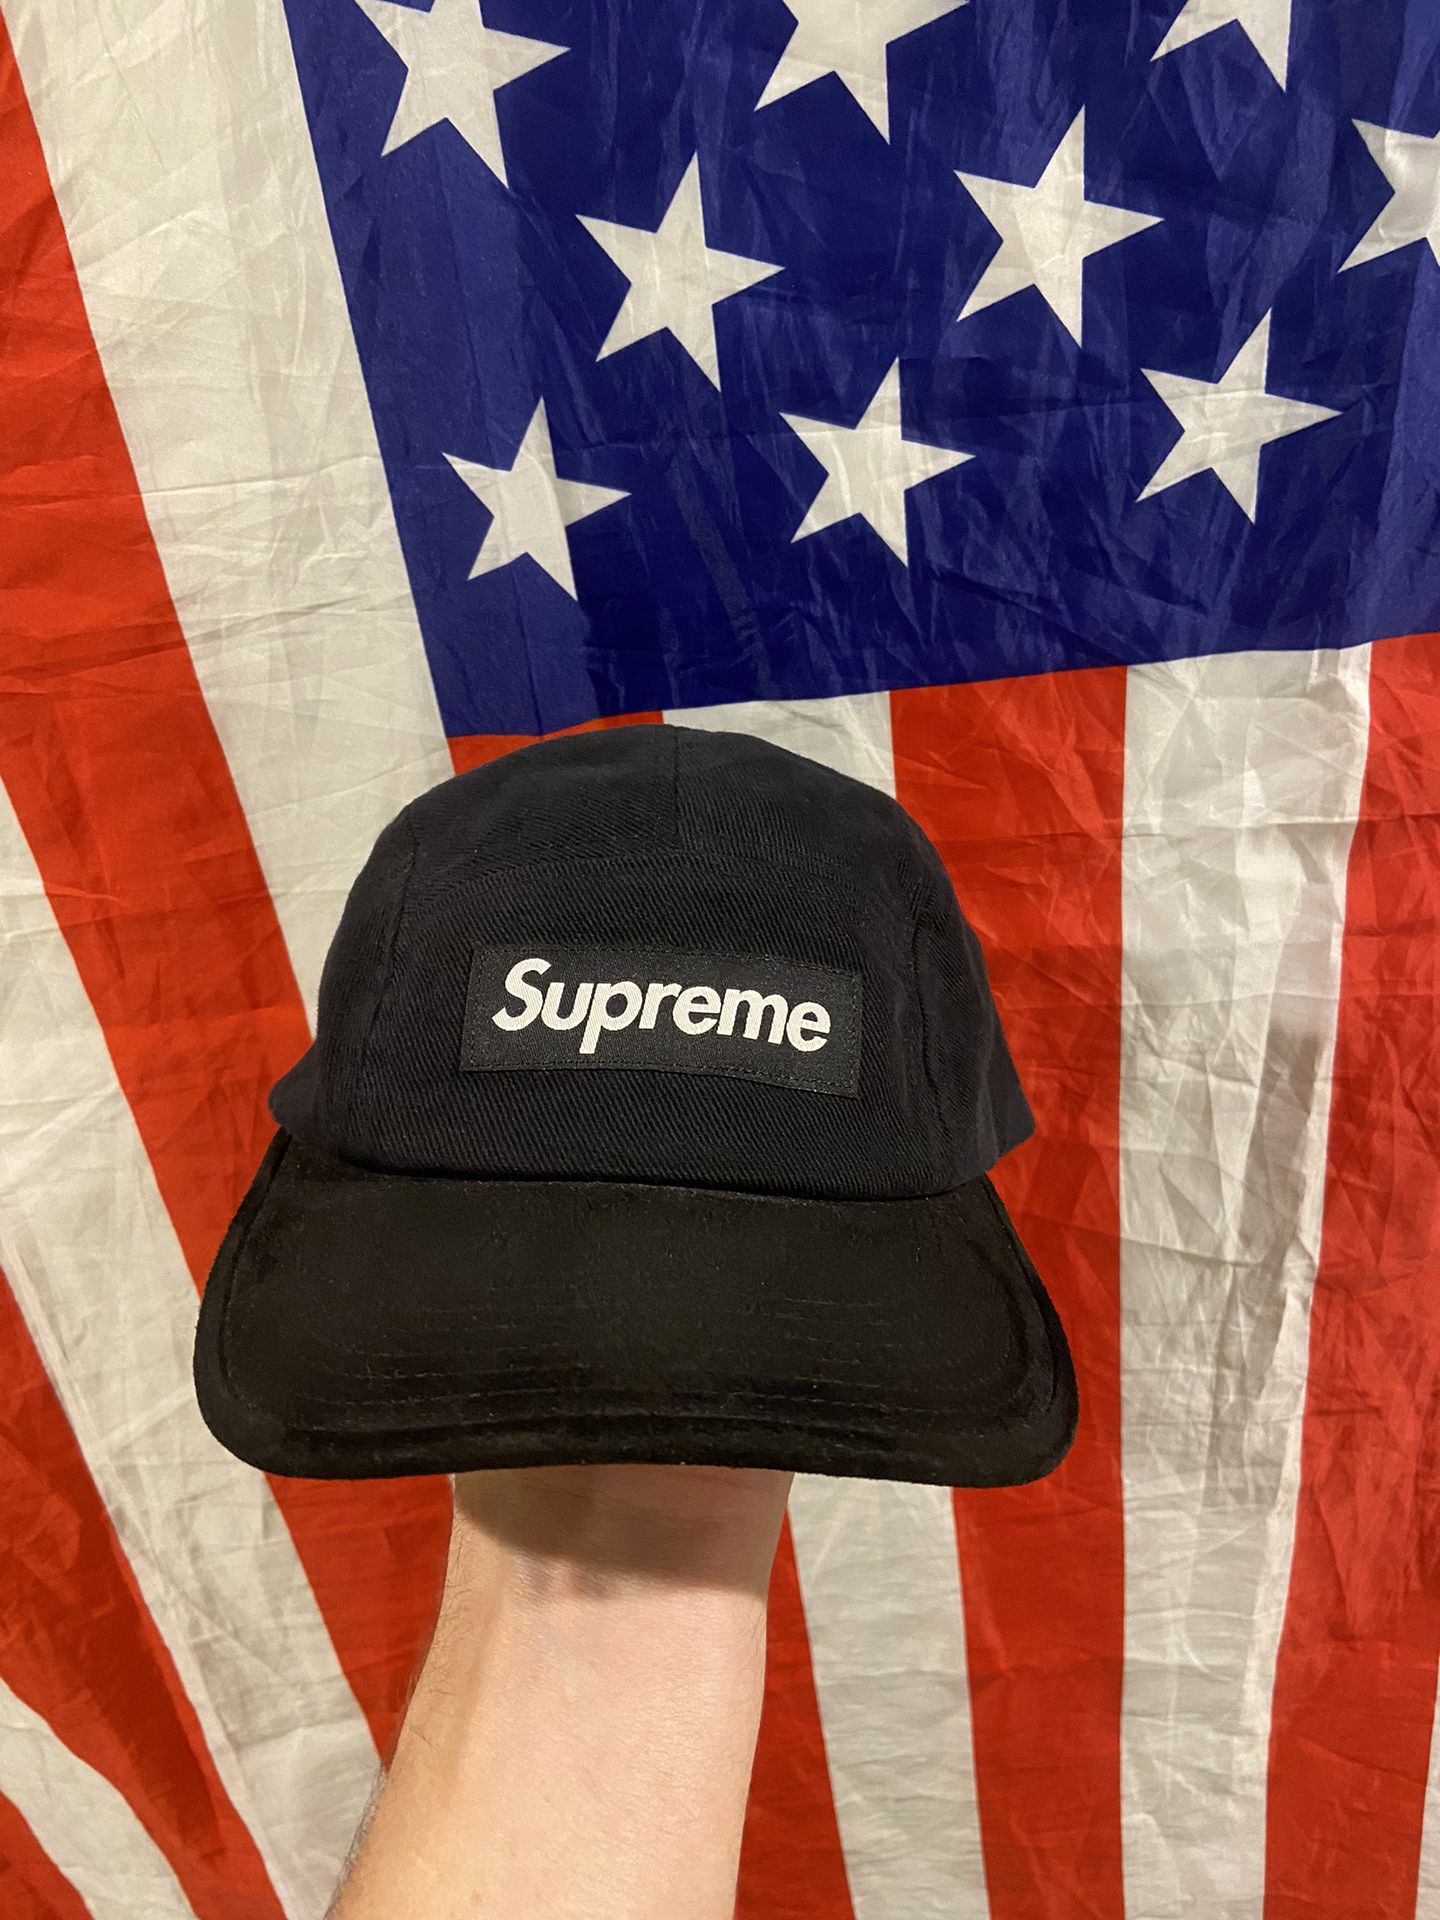 Supreme 5 Panel hat